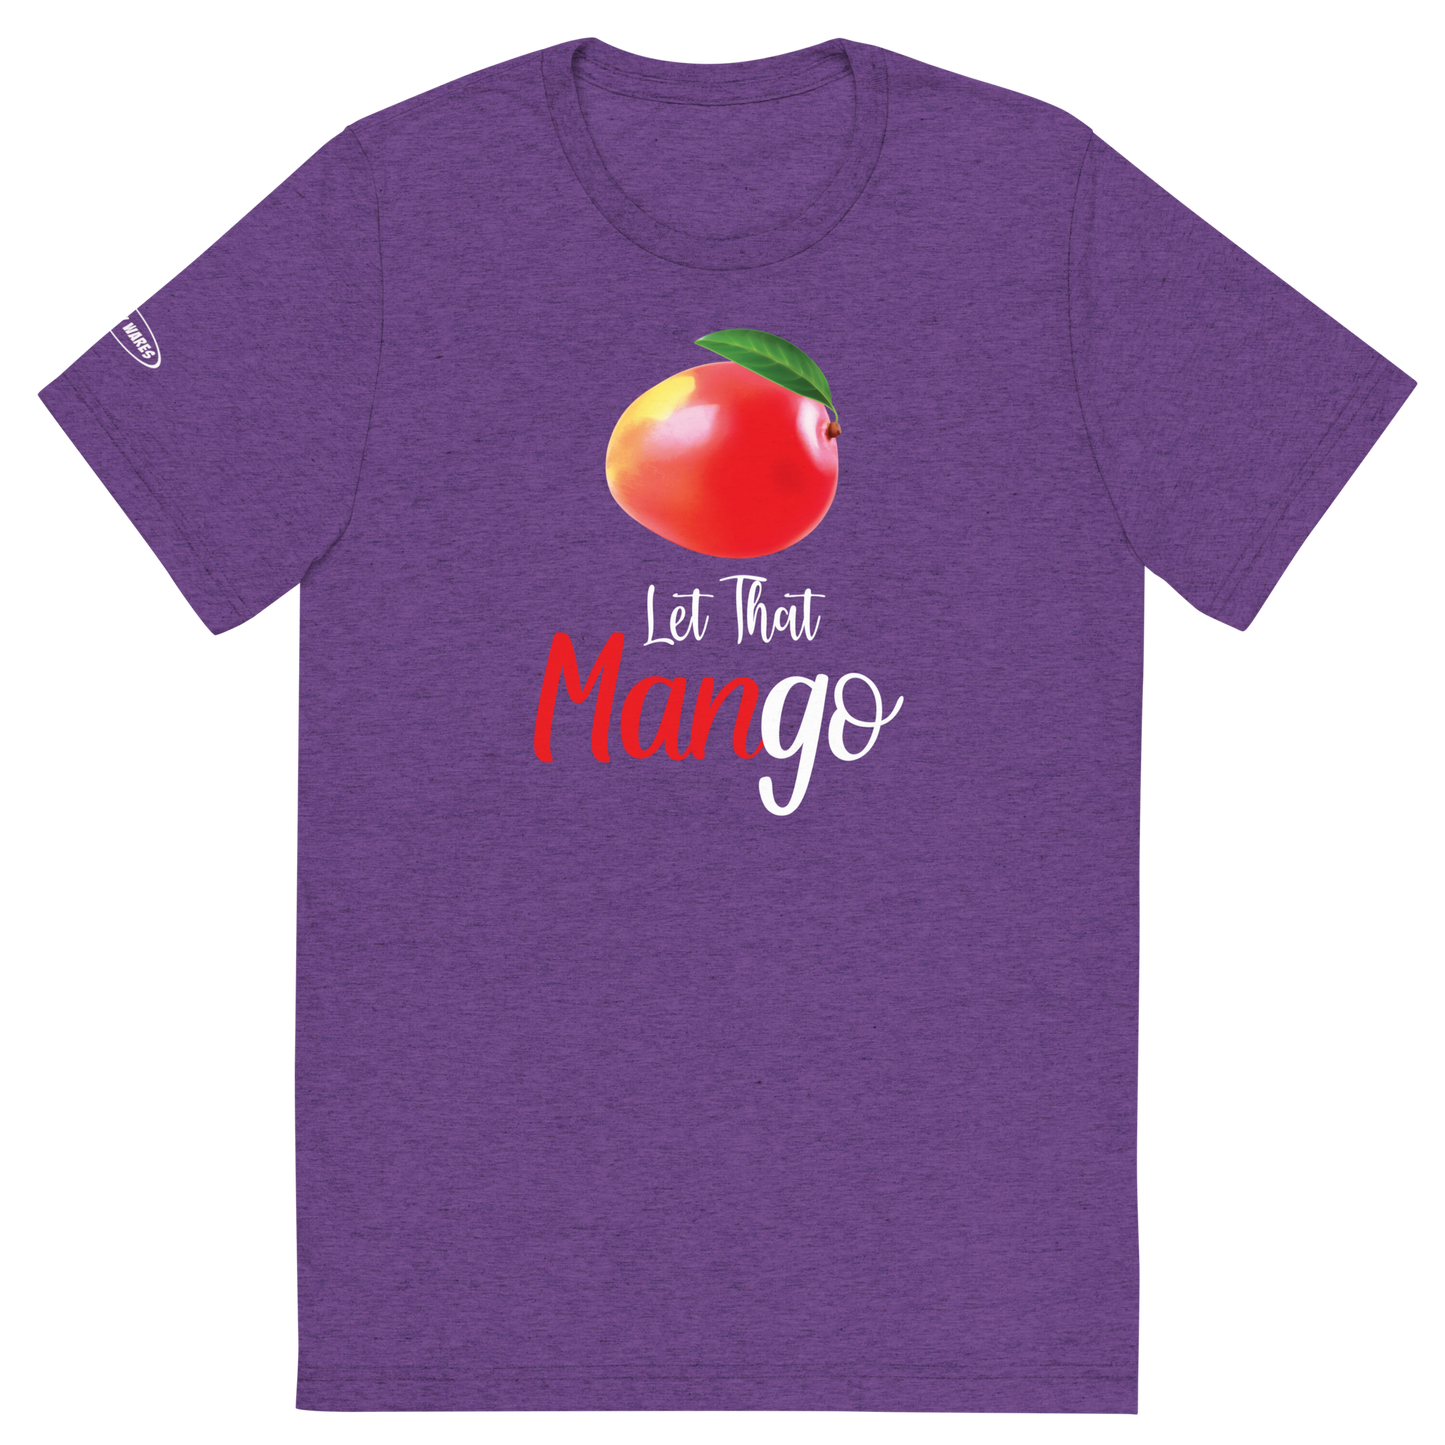 Let that ManGo - Funny t-shirt